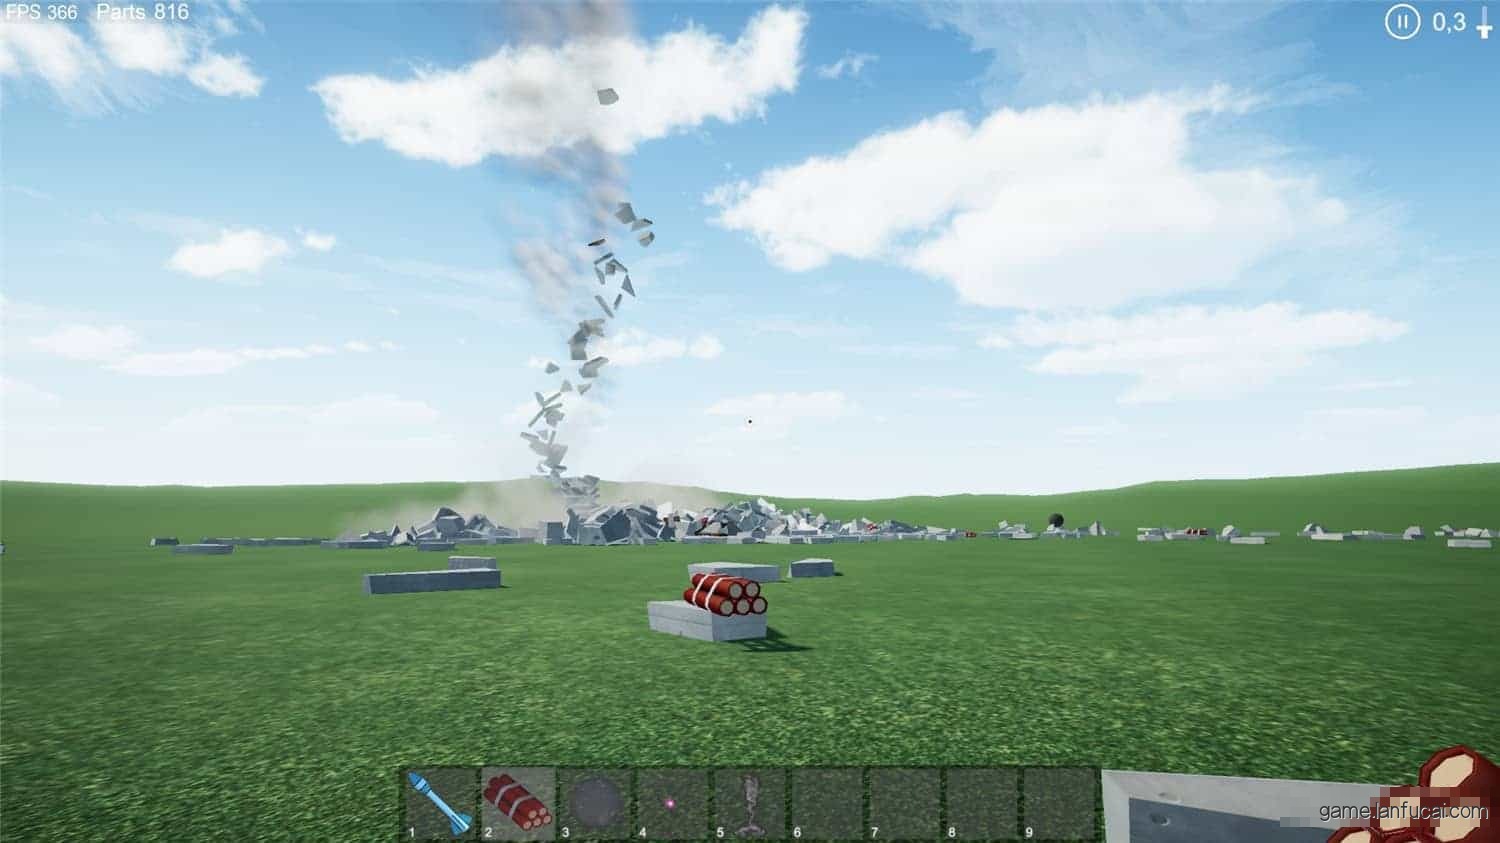 Destructive Physics – Destruction Simulator5